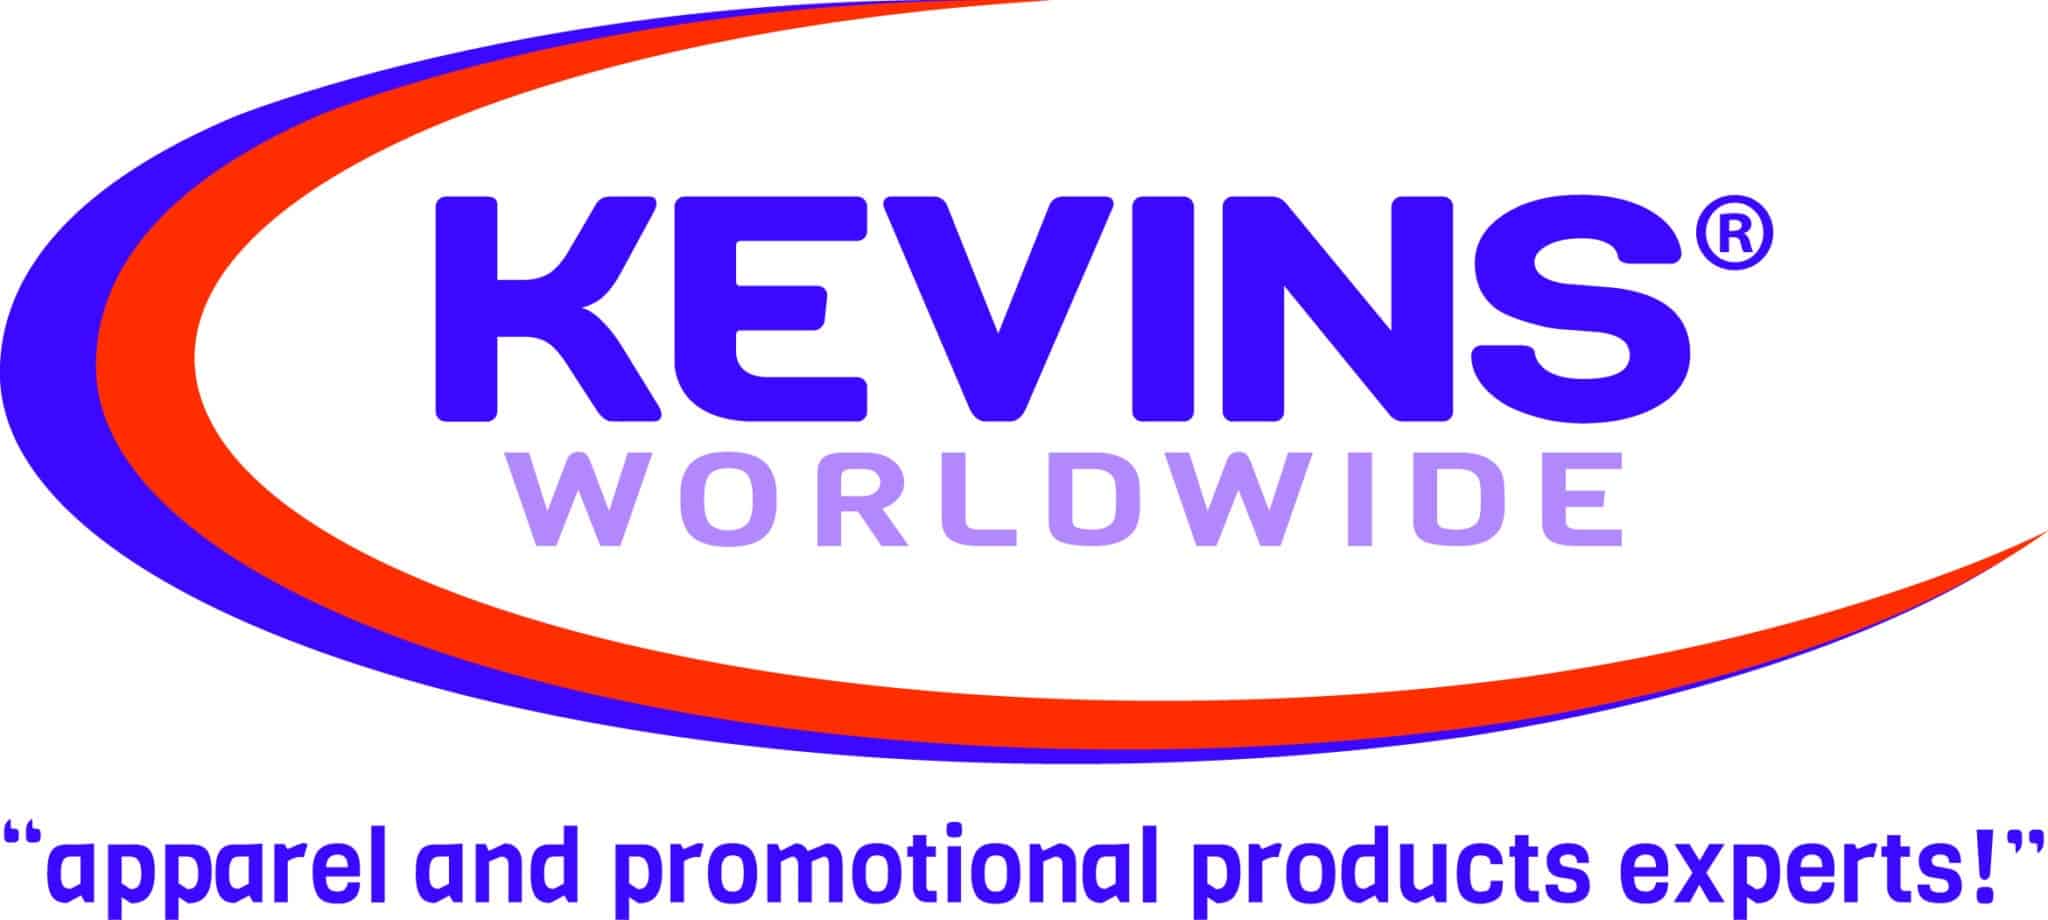 Kevin's Worldwide